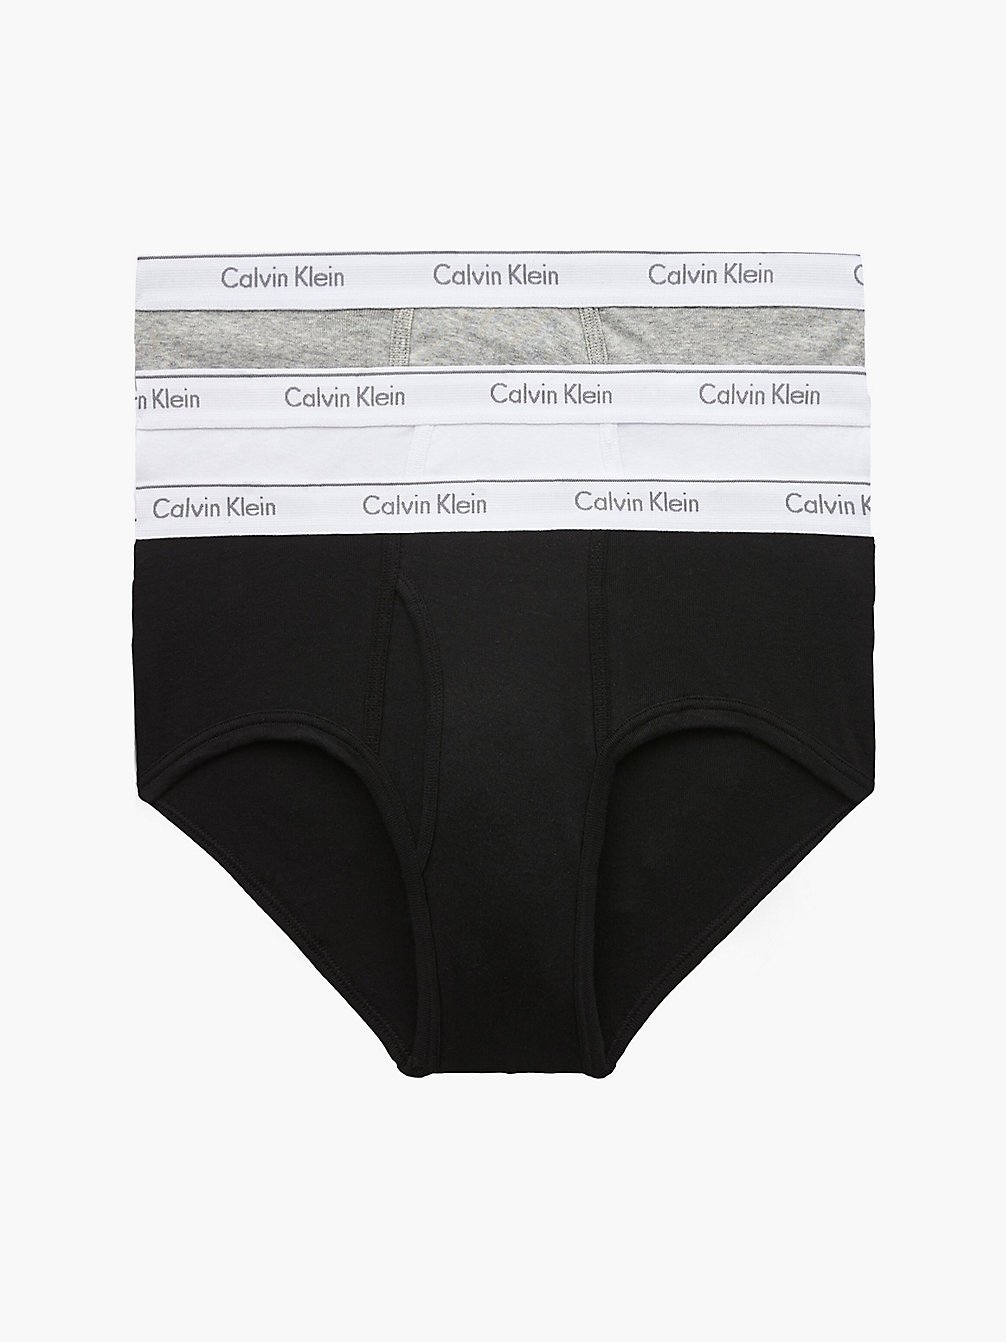 BLACK/WHITE/GREY HEATHER > Комплект брифов 3 шт. - Cotton Classics > undefined женщины - Calvin Klein